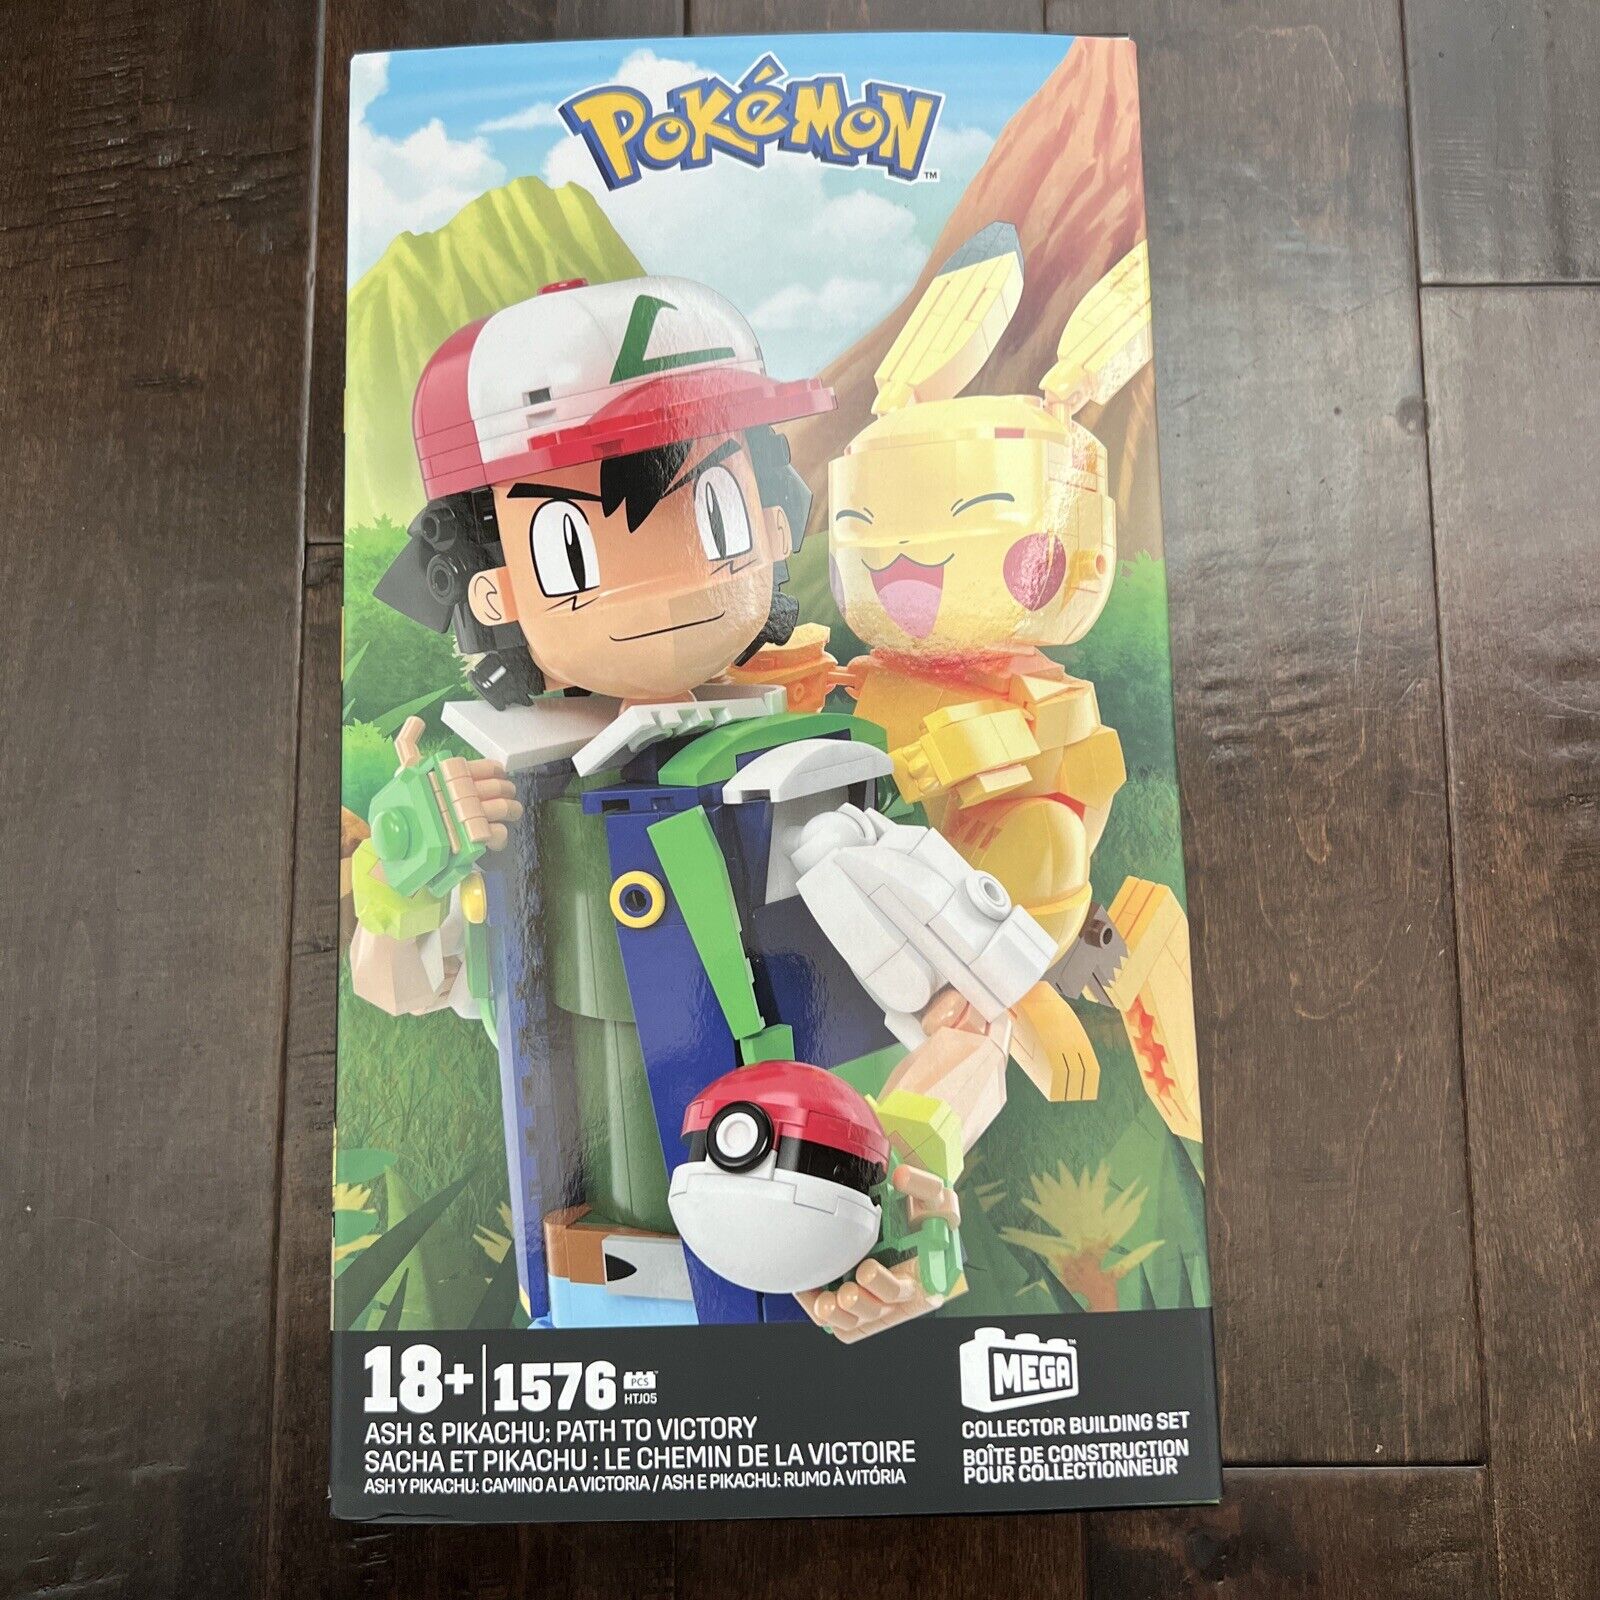 Pokemon MEGA - Mattel Creations - Ash & Pikachu: Path to Victory  Brand New